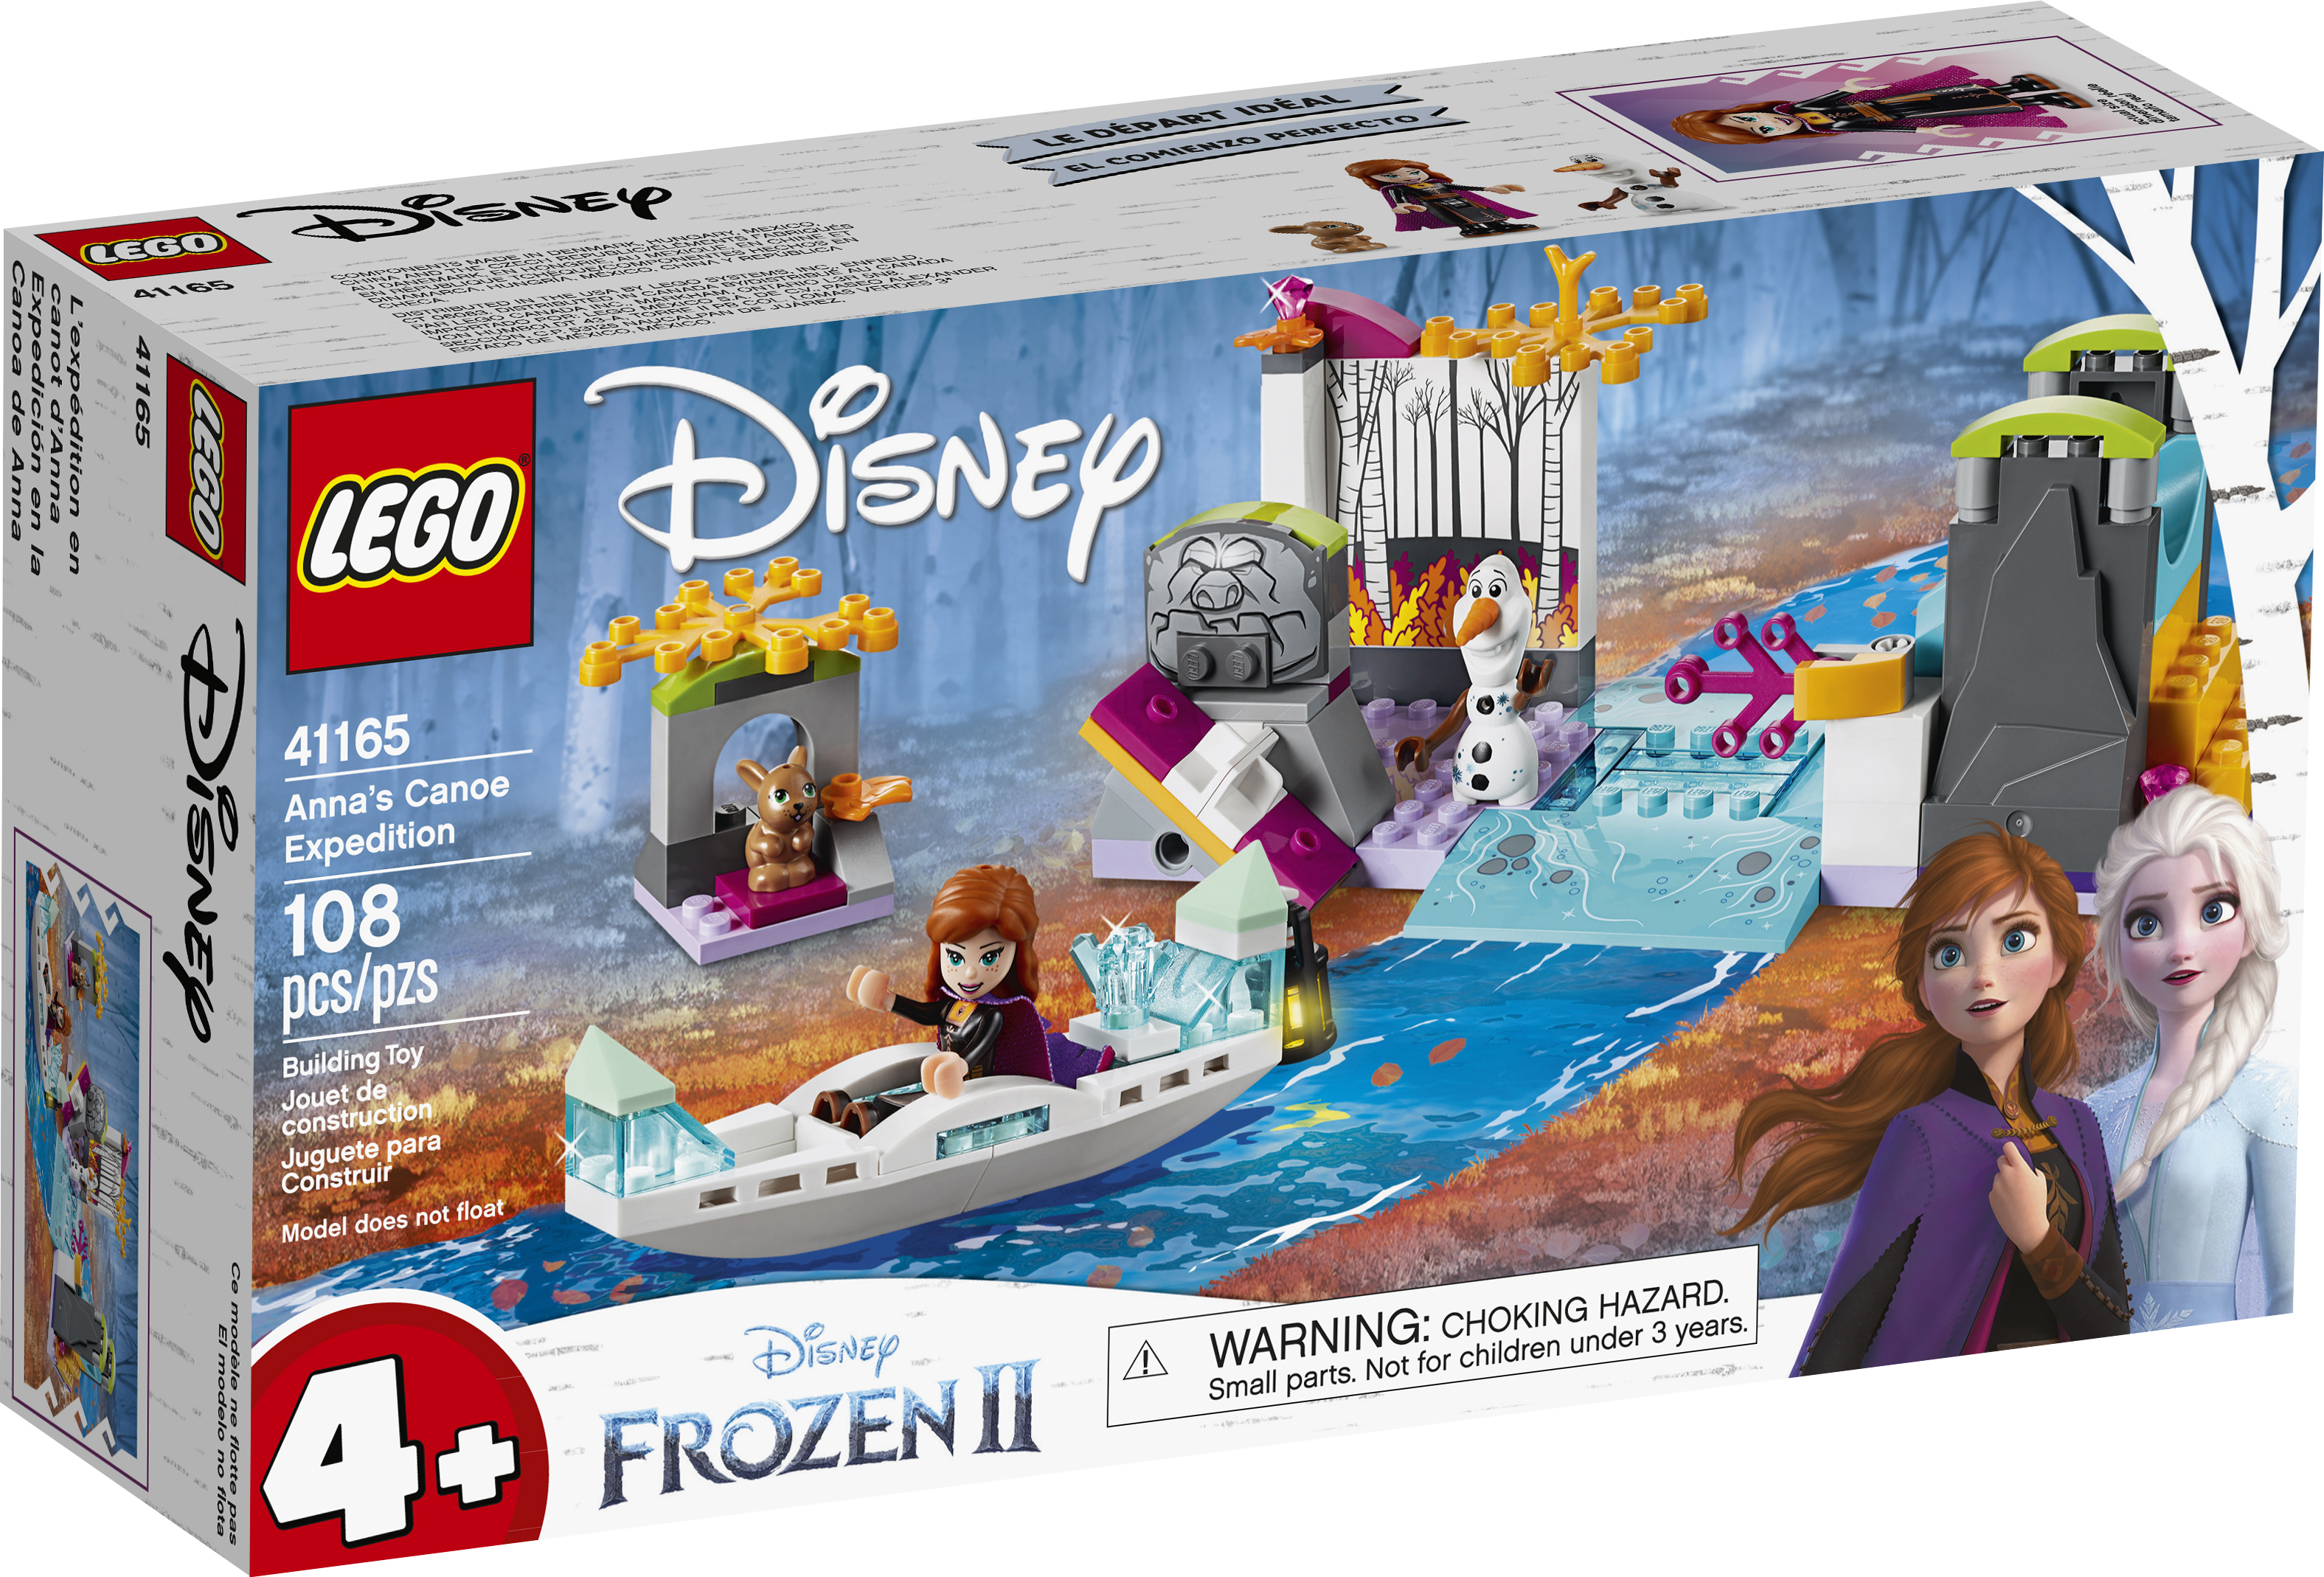 LEGO Disney Frozen II Anna's Canoe Expedition 41165 Building Kit - image 5 of 8